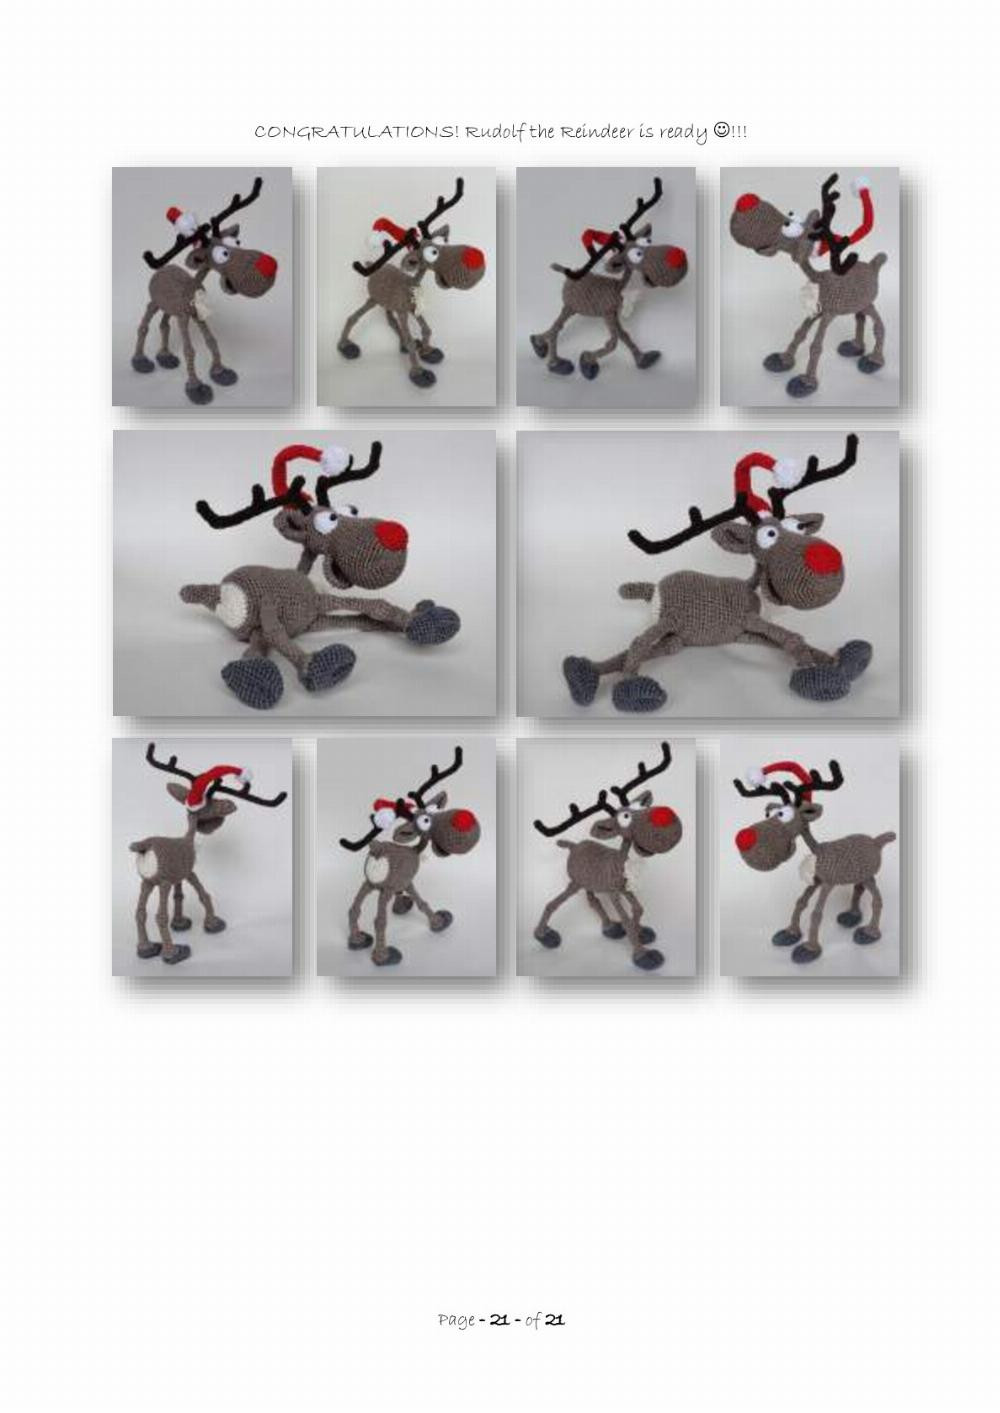 Rudolf the Reindeer crochet pattern